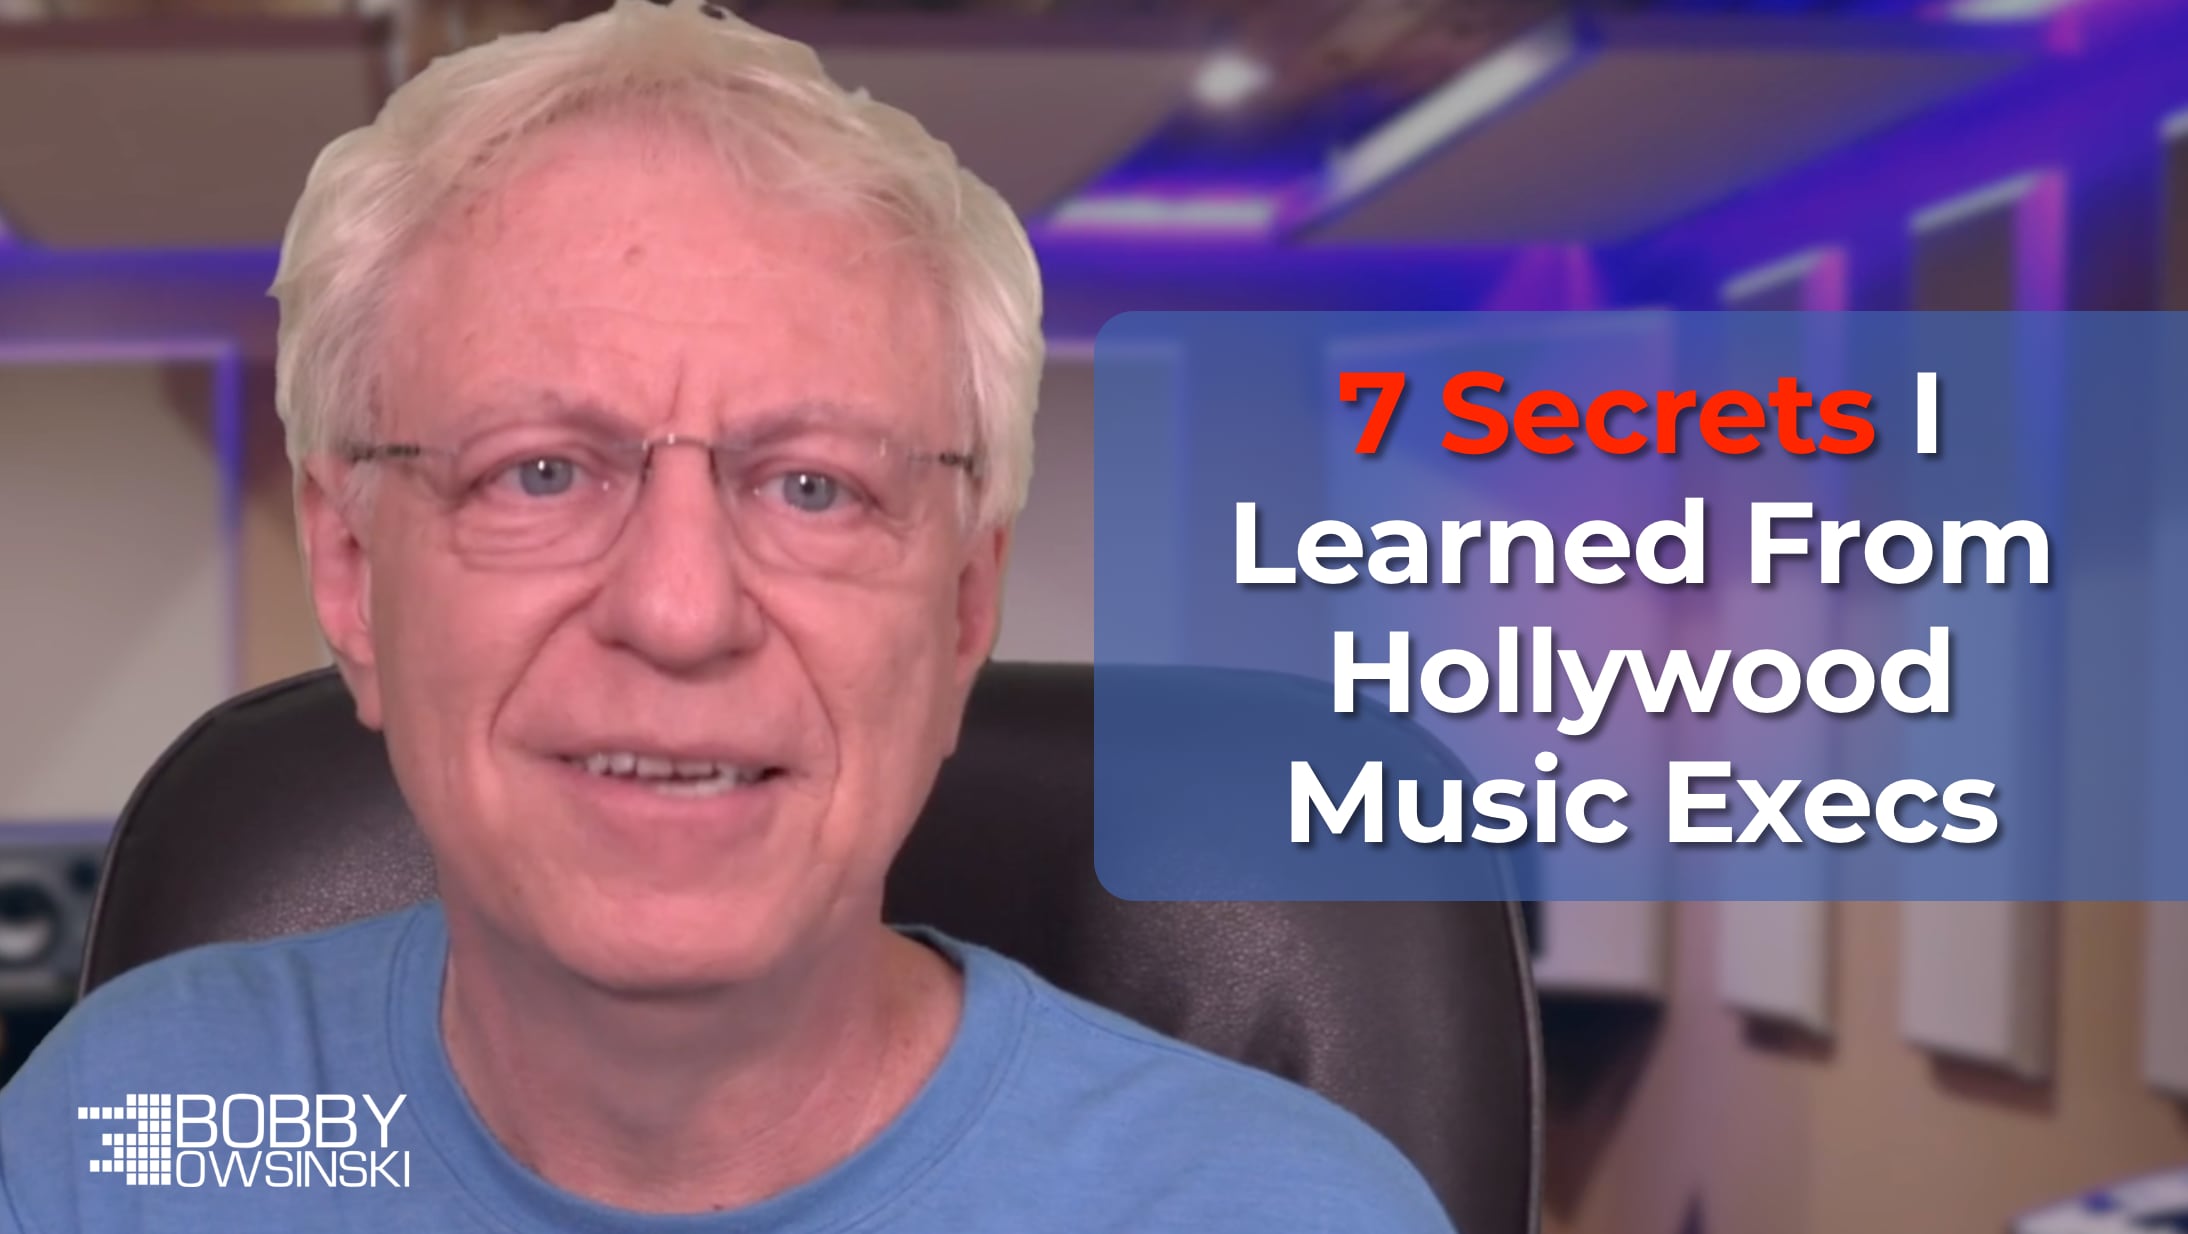 7 Secrets I Learned From Hollywood Music Execs webinar